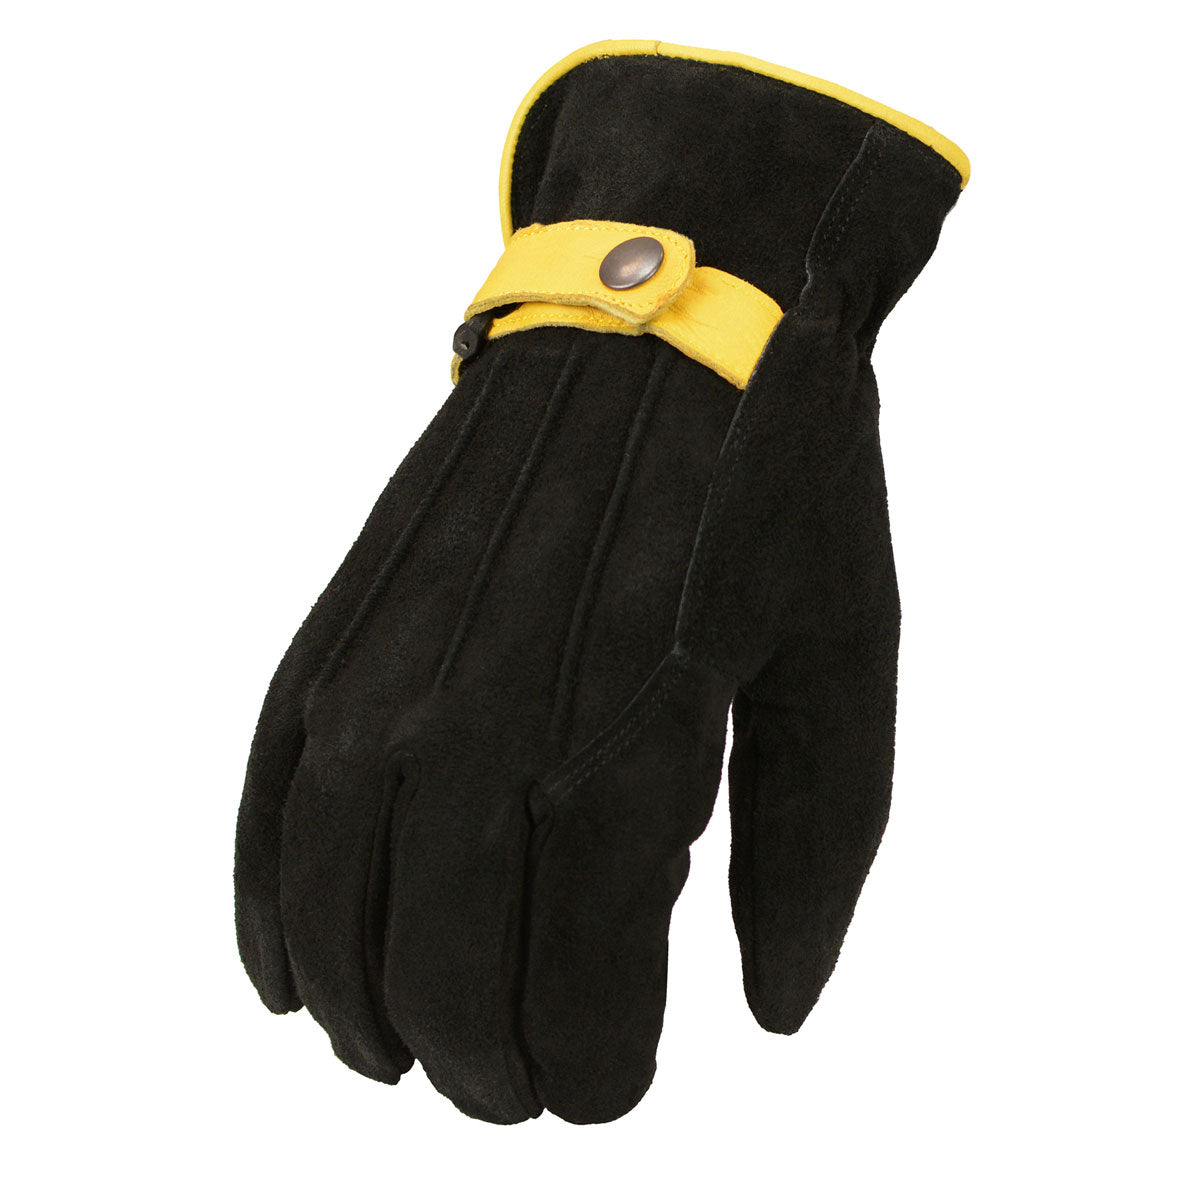 M Boss Apparel BOS37558 Men's Black and Tan Leather Deer Skin Gloves